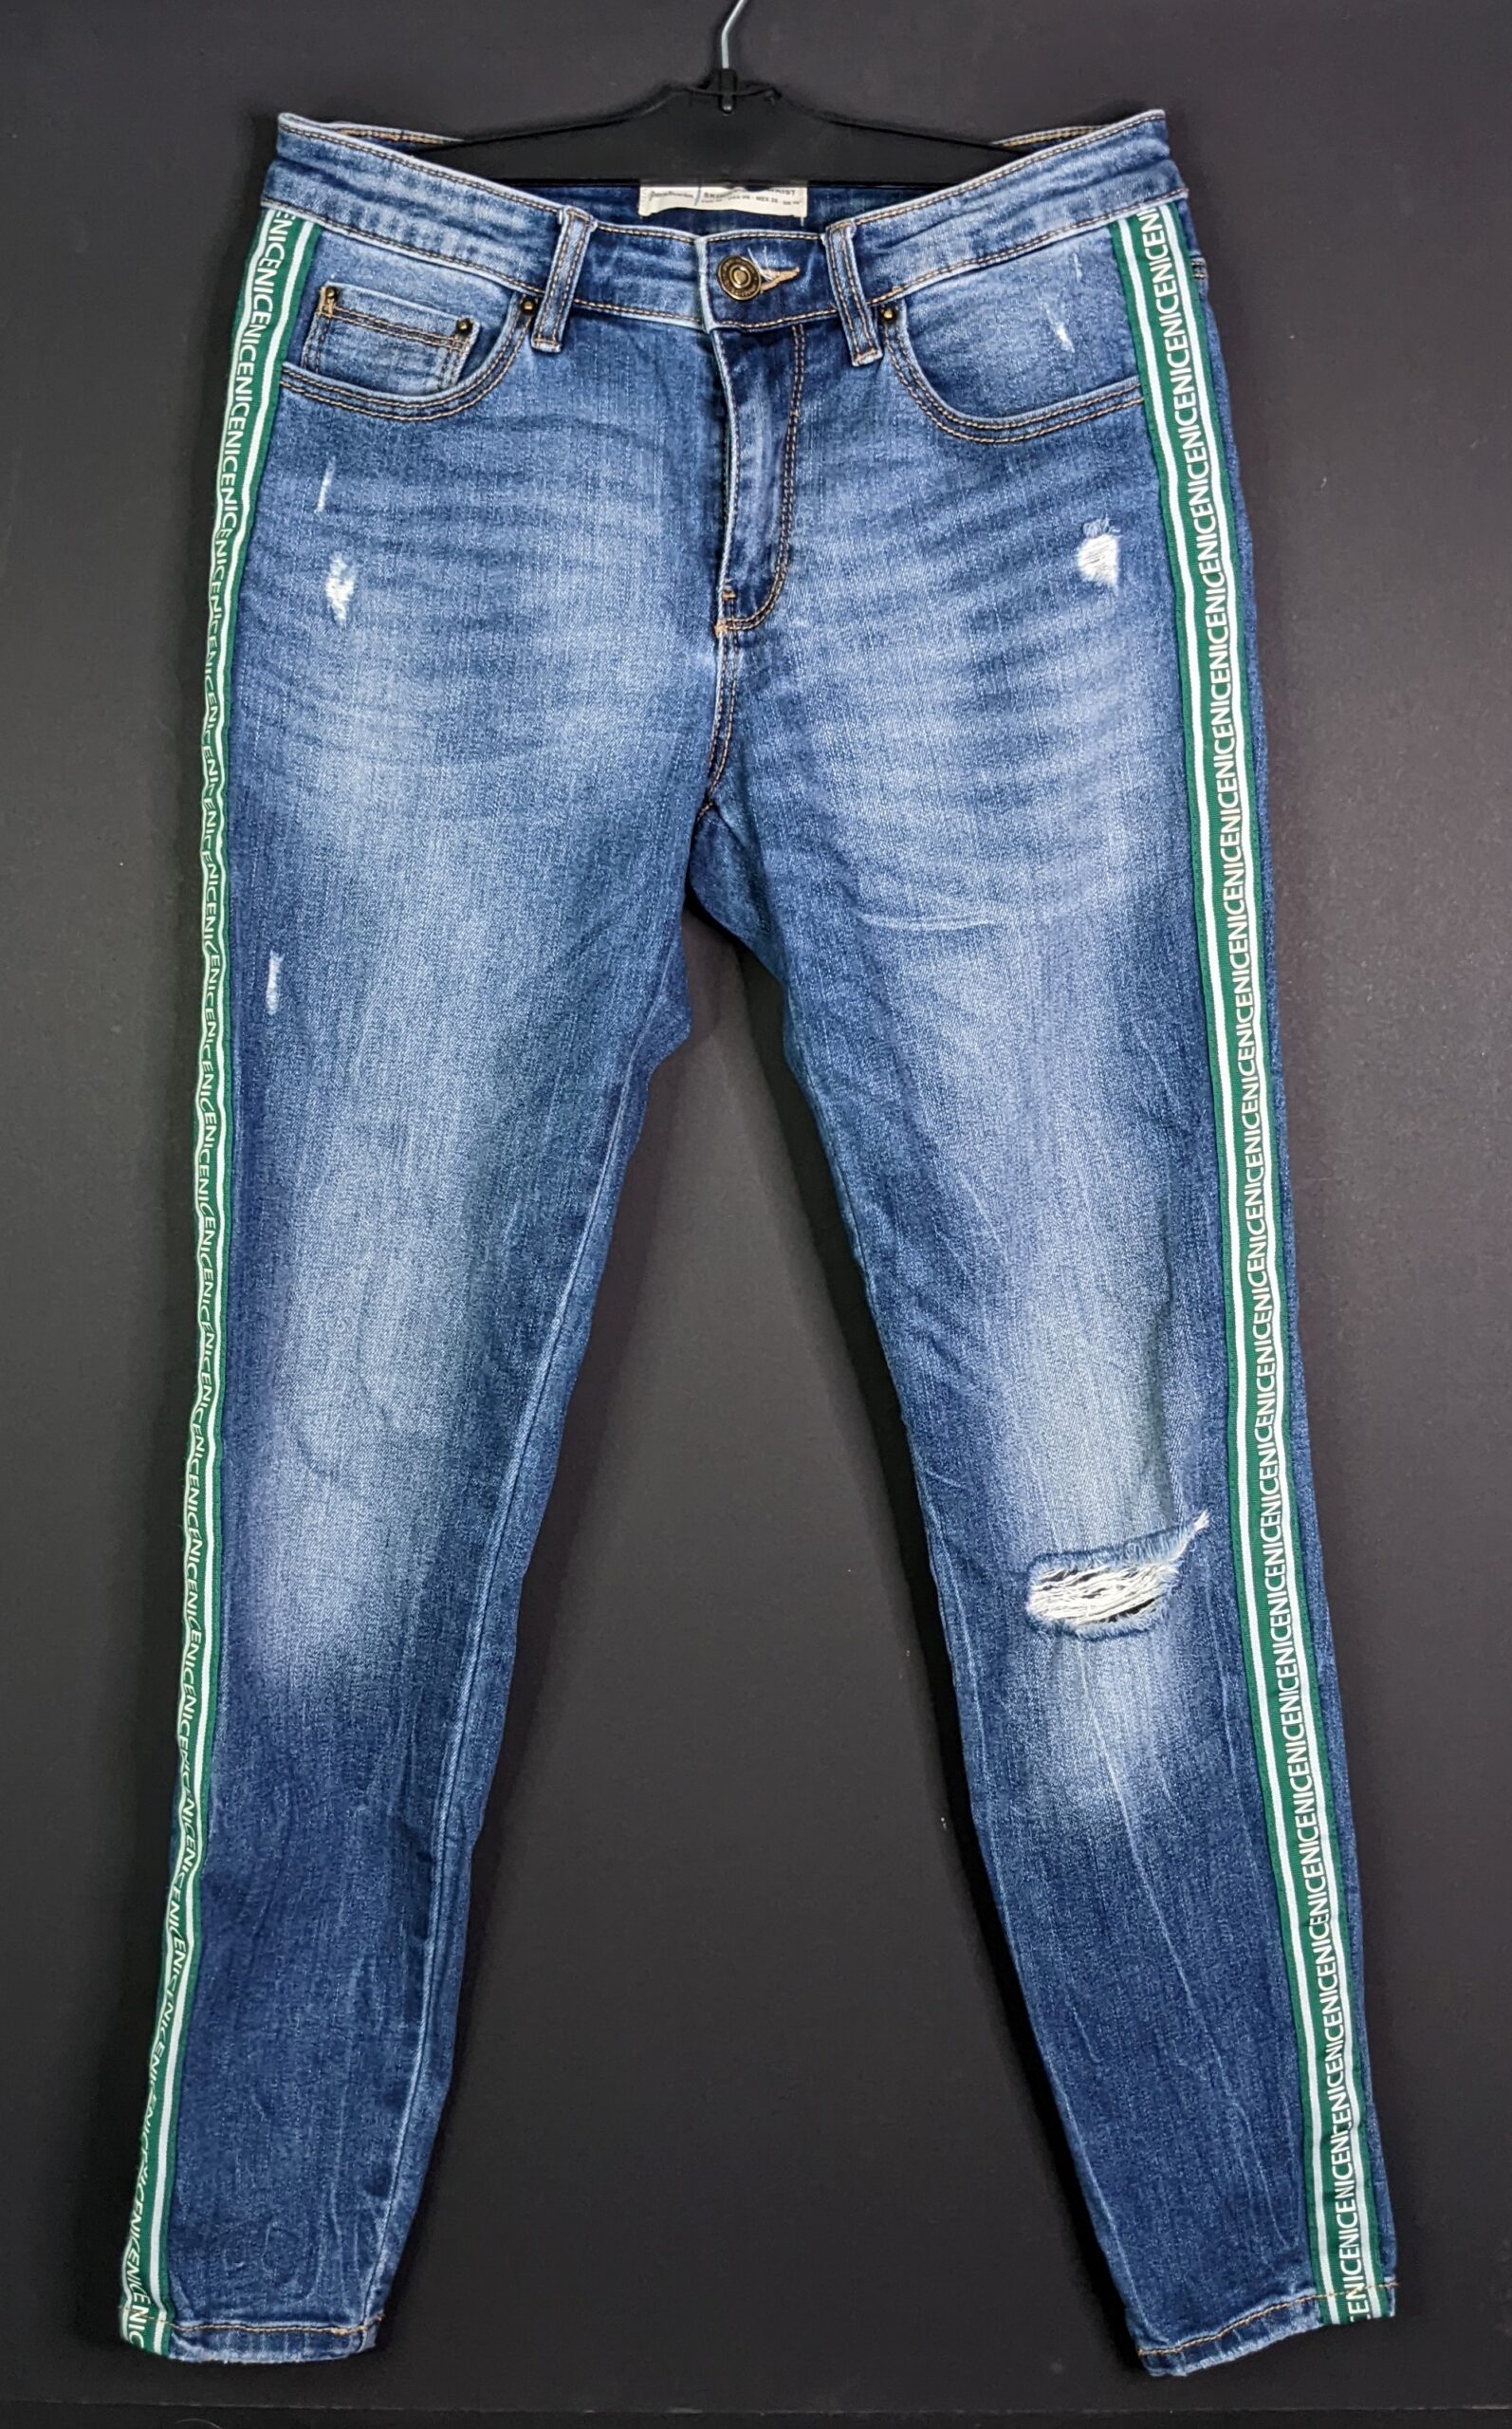 Jeans con franjas – Talla USA 06